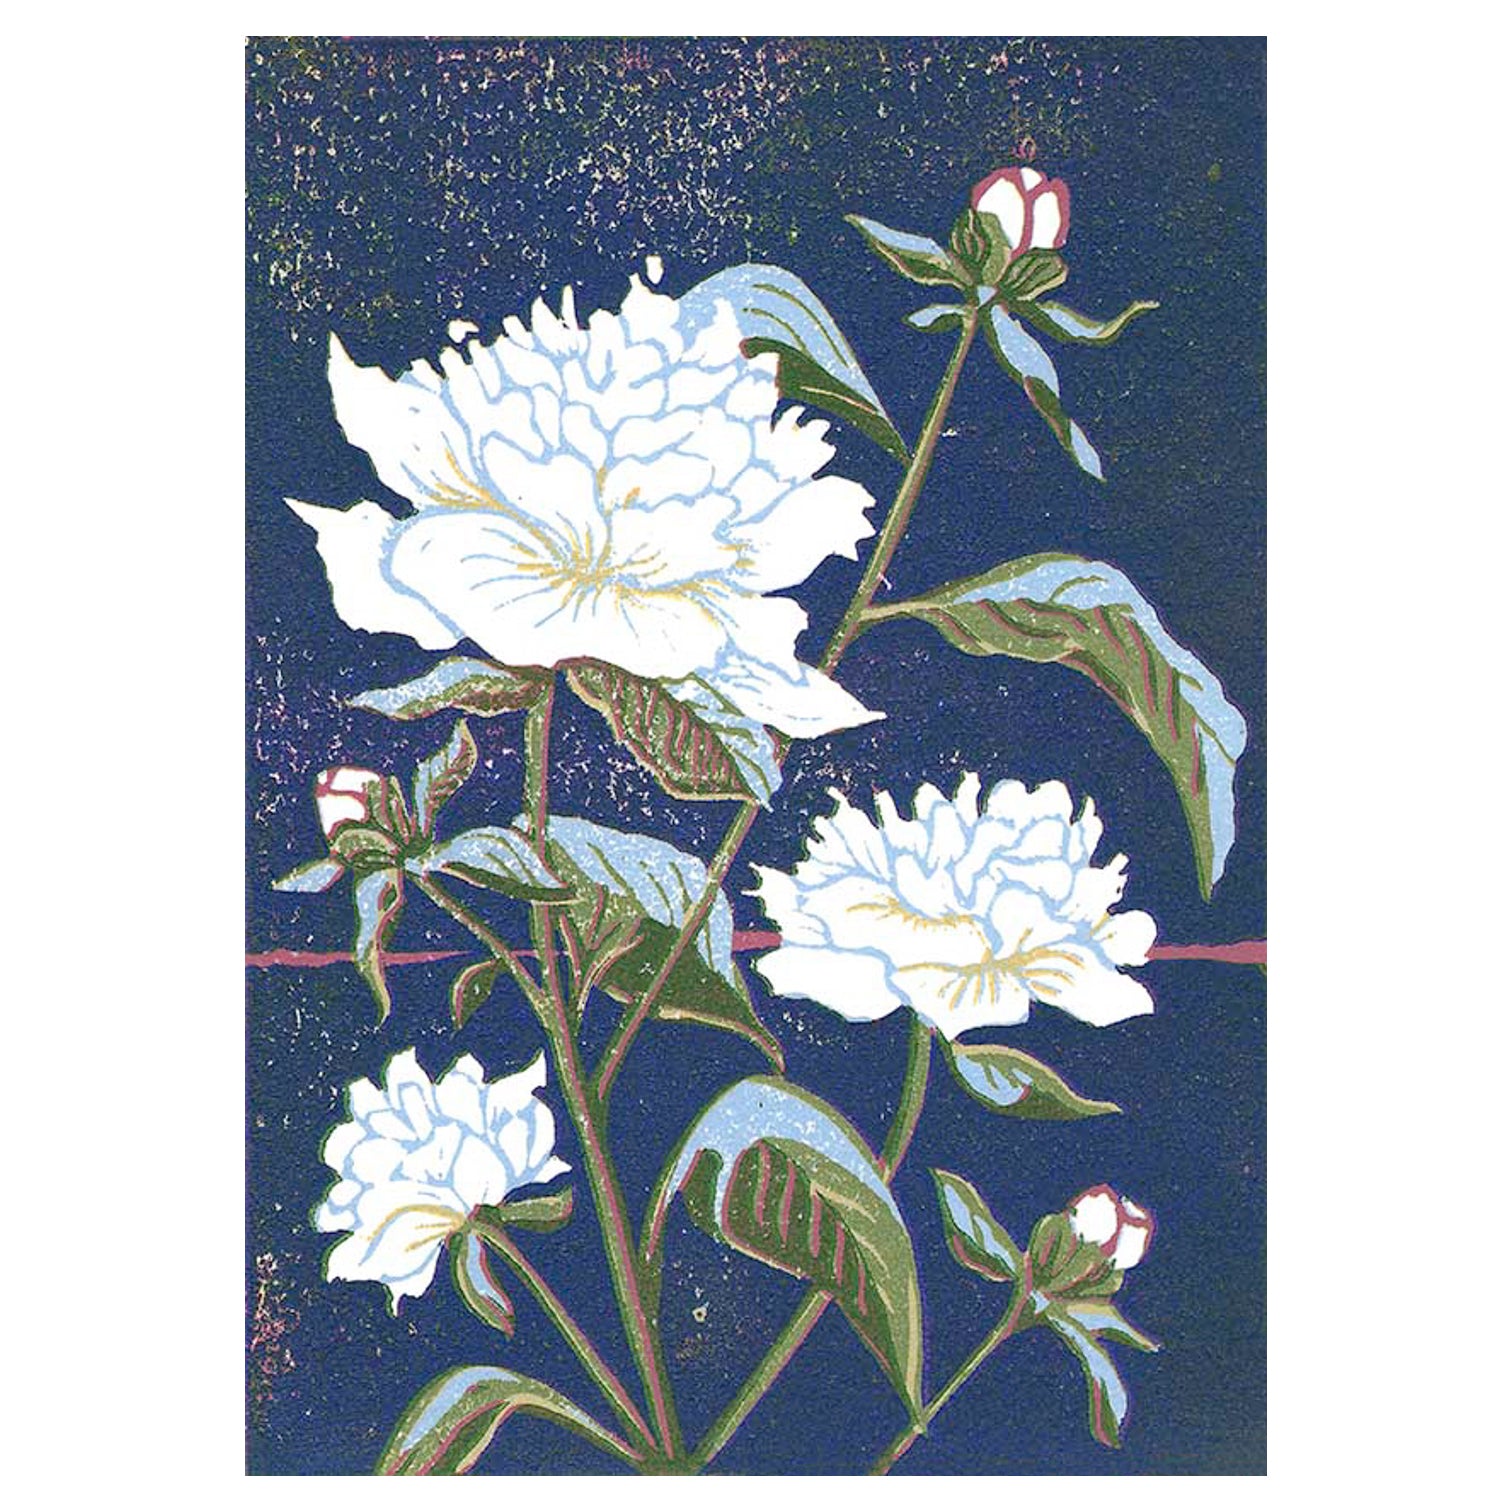 Peony flower art by printmaker Natalia Wohletz of Peninsula Prints, Milford & Mackinac Island, Michigan, titled Peonies.